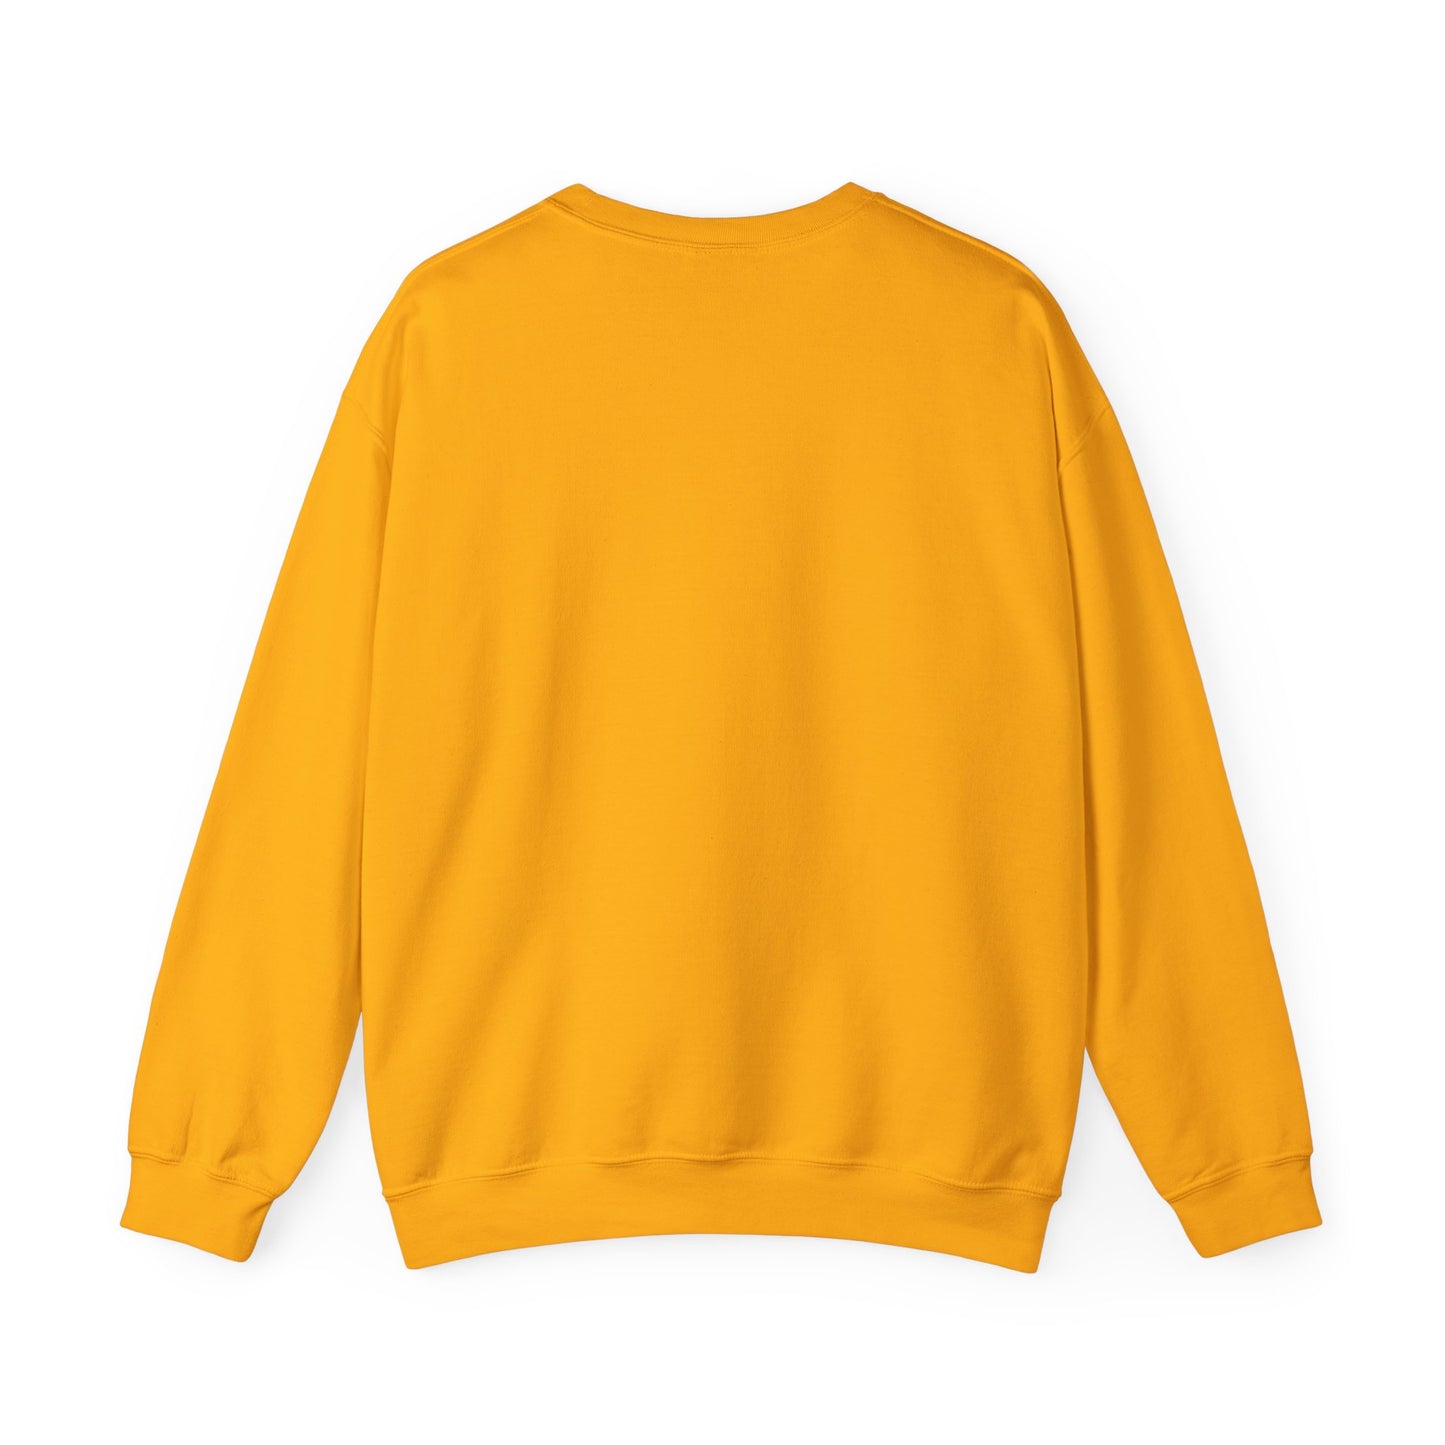 This is my Mental Breakdown Sweatshirt, Unisex Heavy Cotton sweatshirt